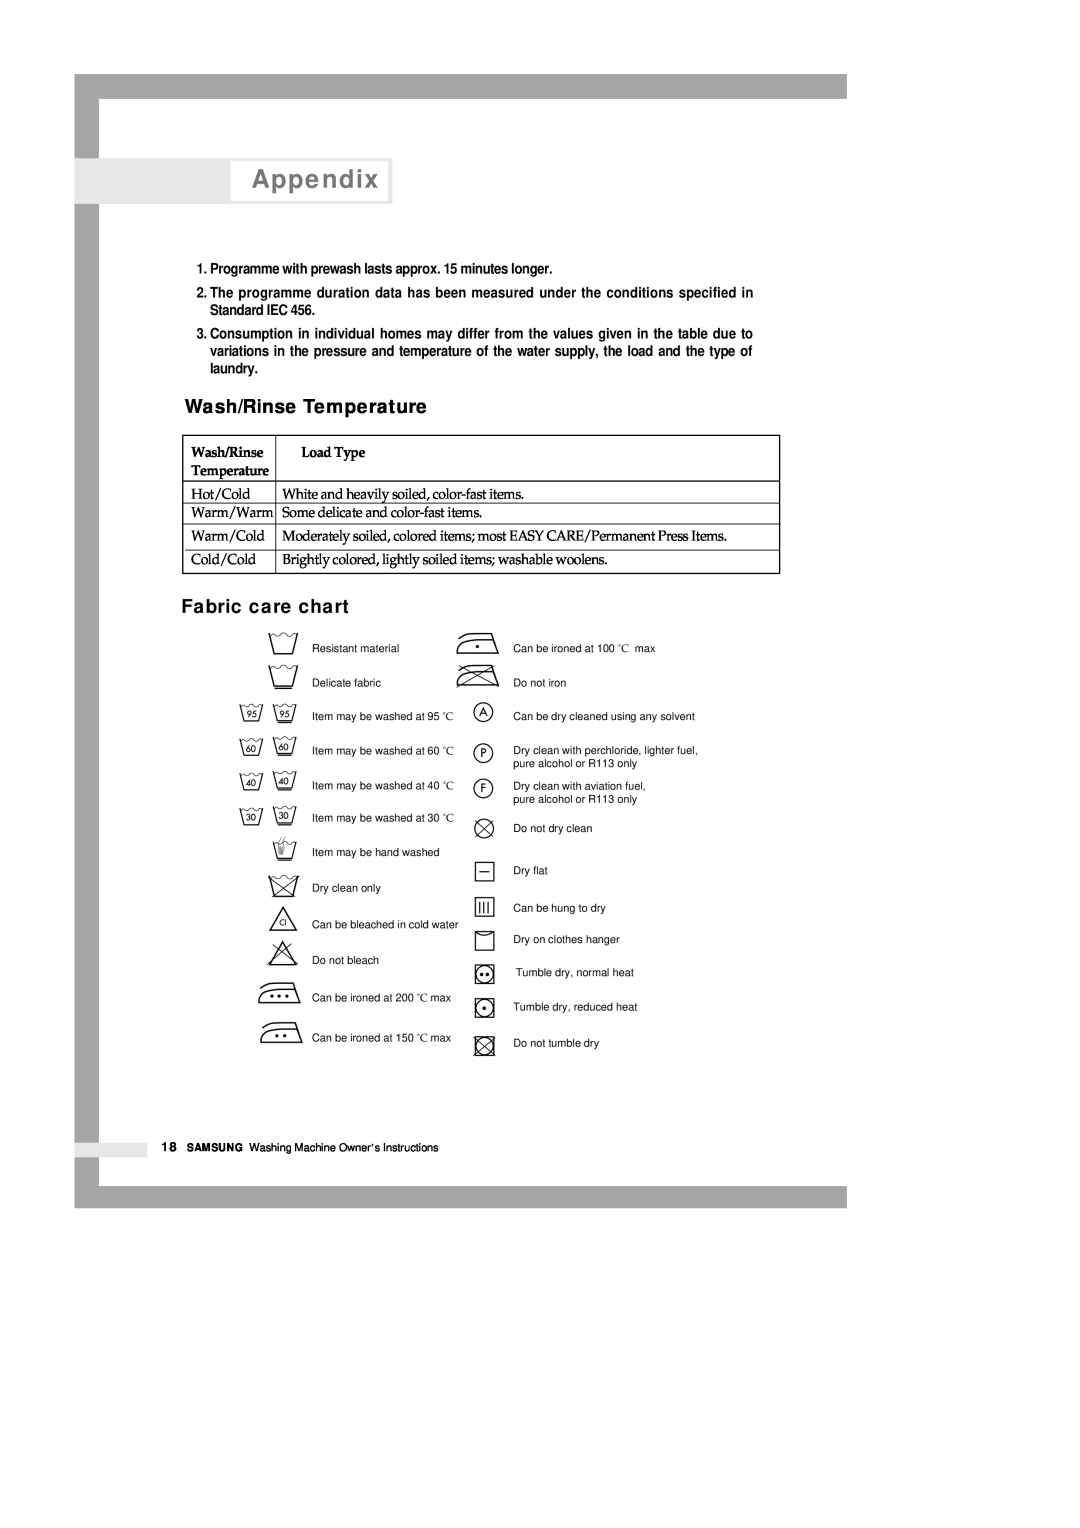 Samsung B1113J B913J manual Appendix, Wash/Rinse Temperature, Fabric care chart 